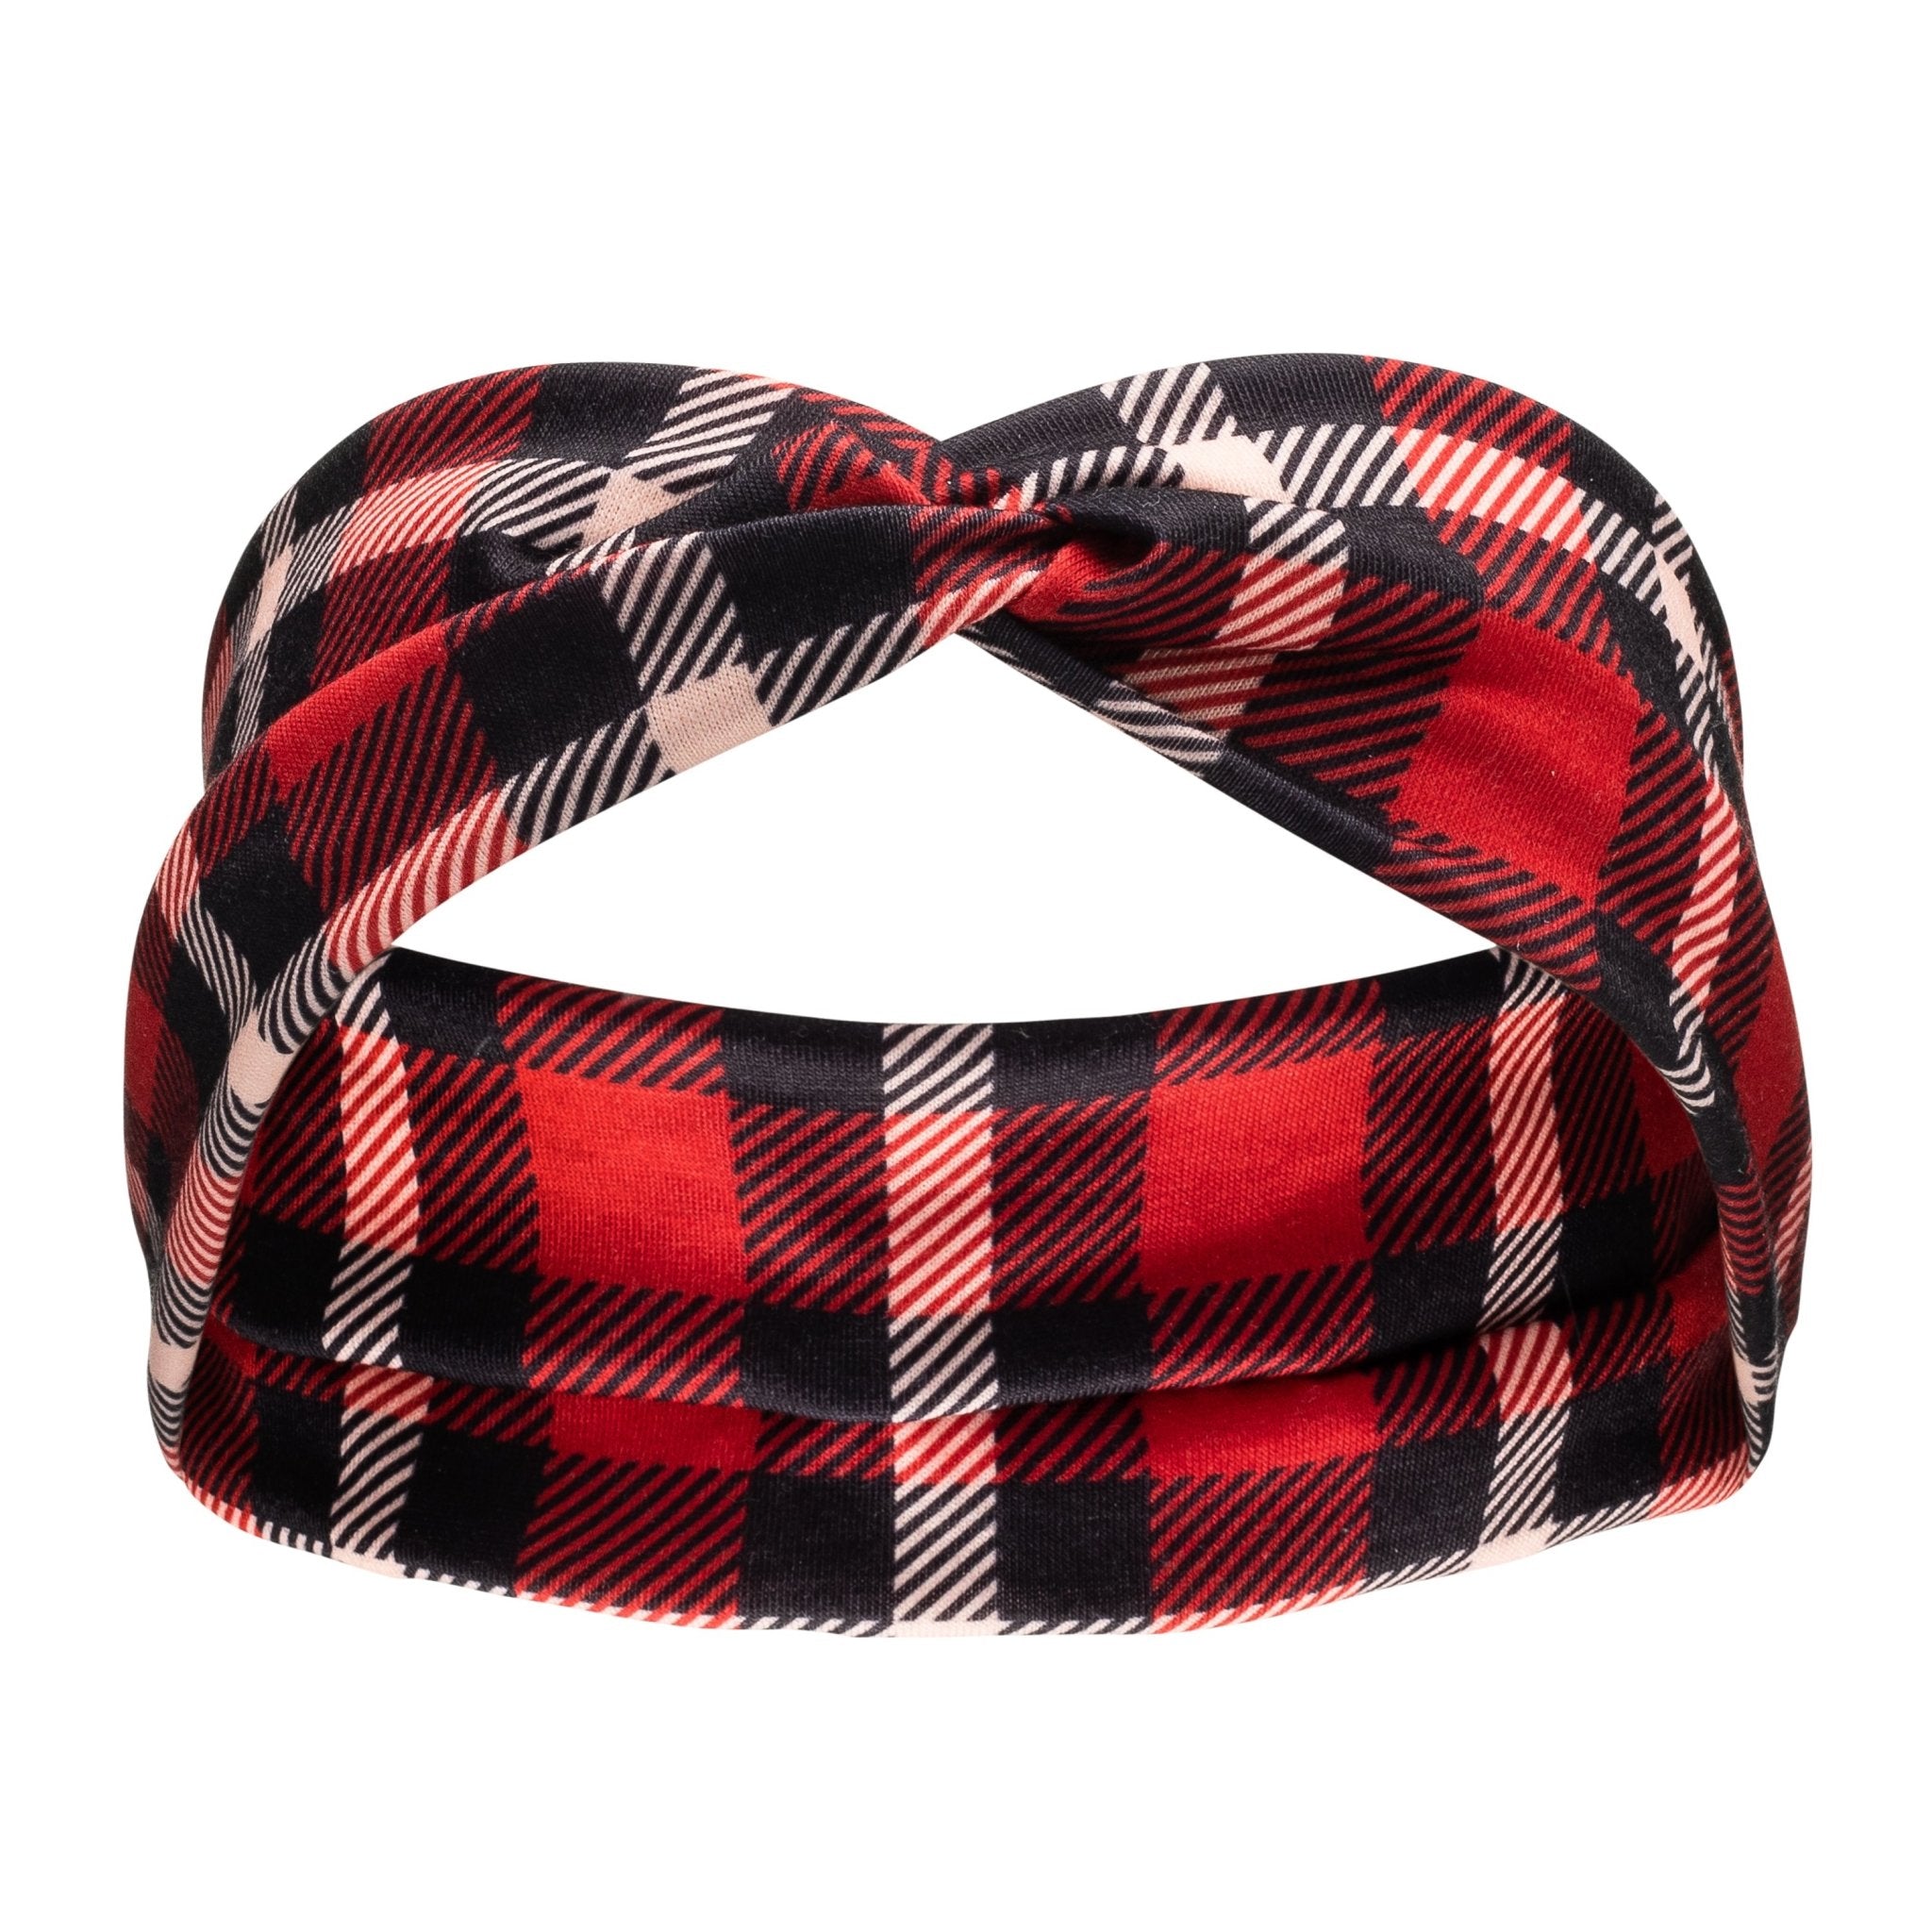 Matching Headband - Red and Black Plaid - Canine Compassion Bandanas